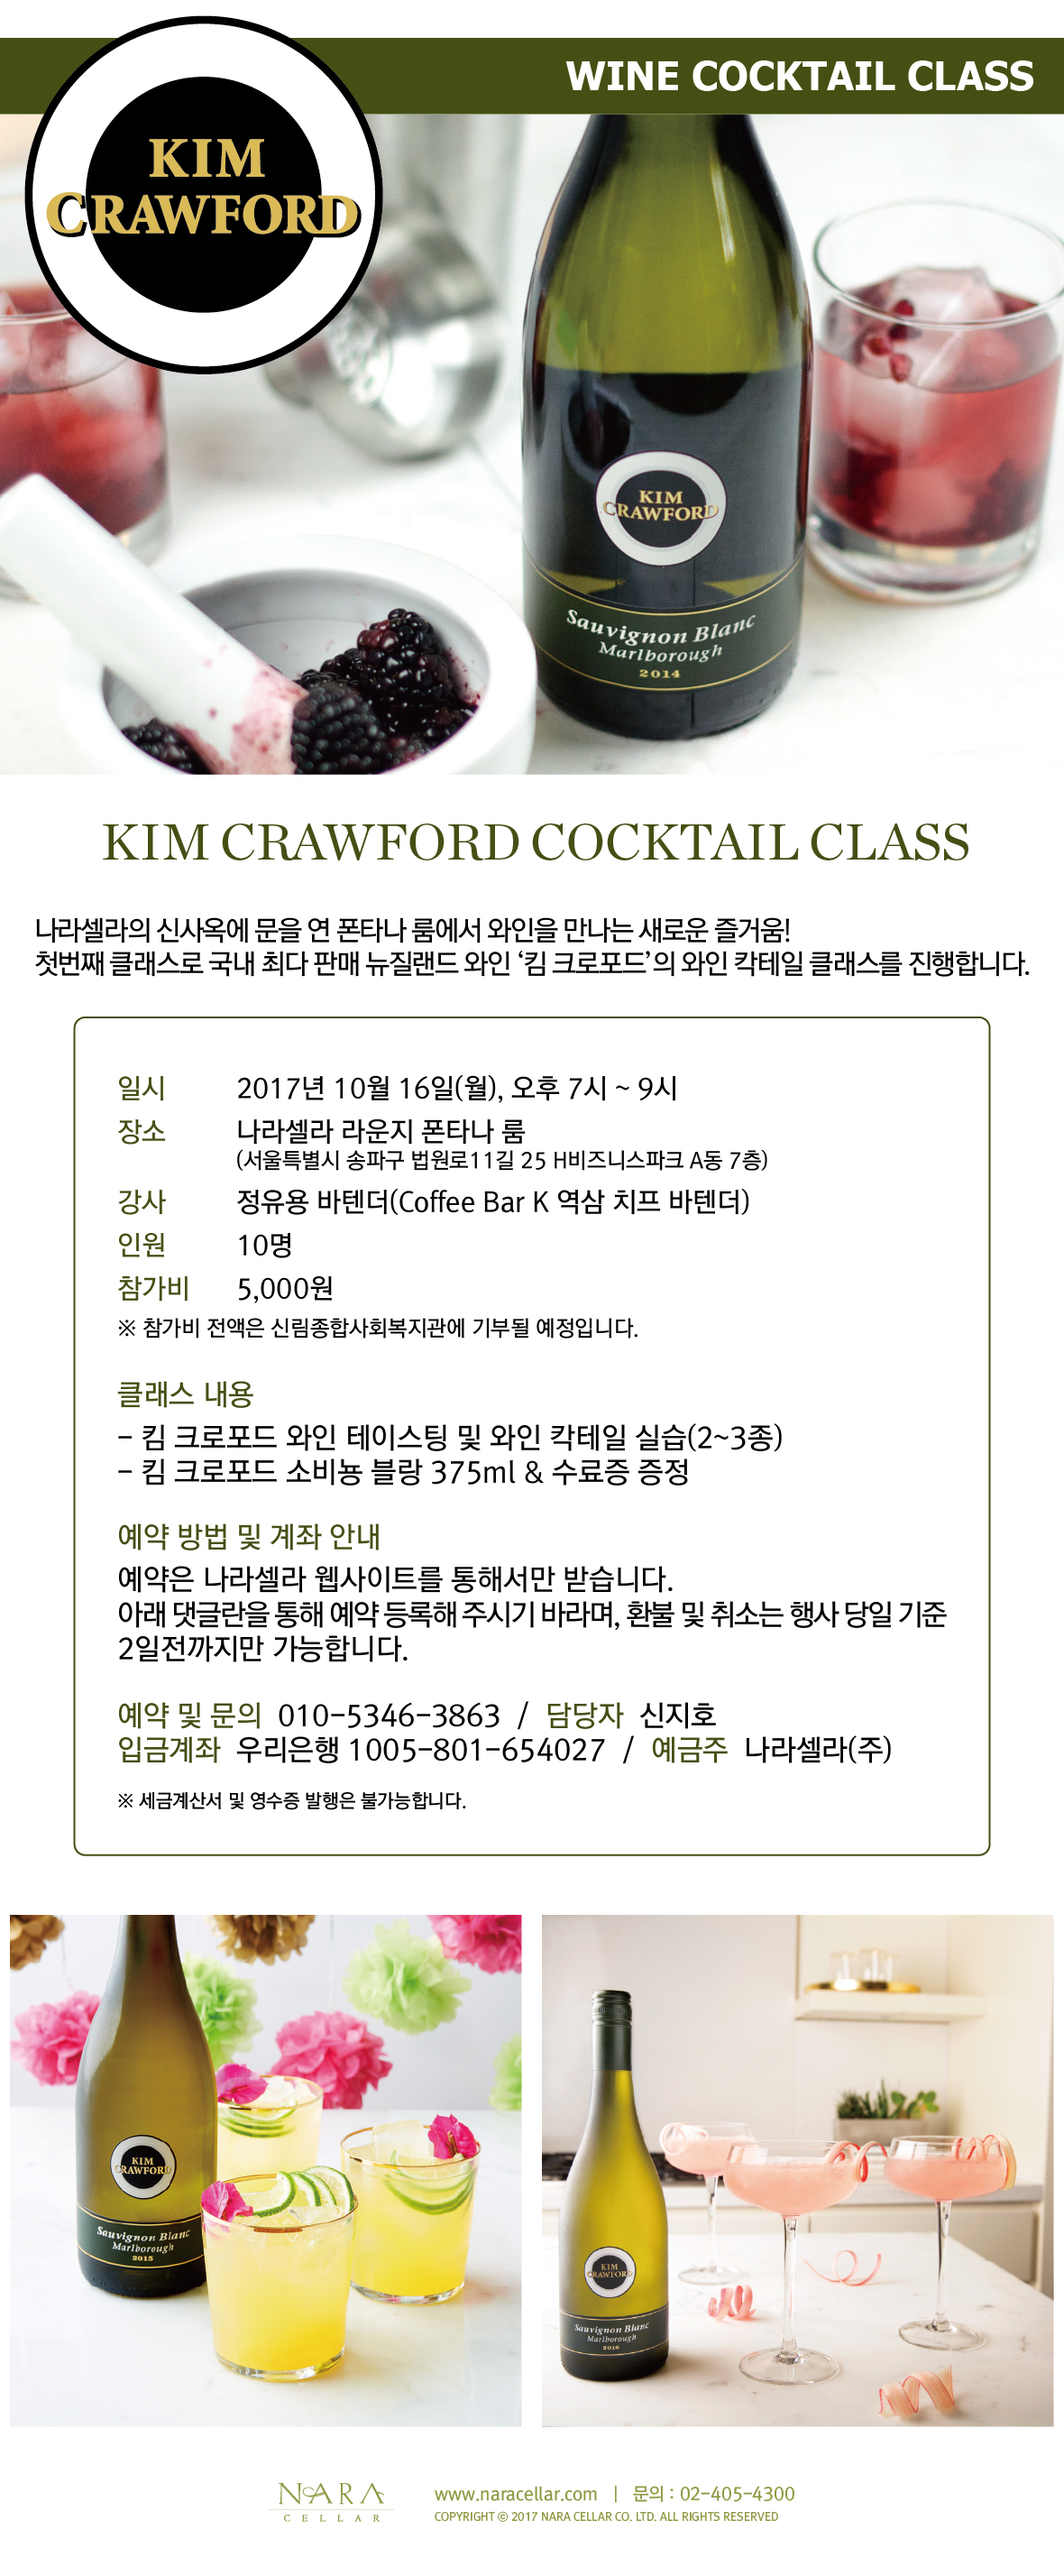 kim-crawford-wine-cocktail-class.jpg